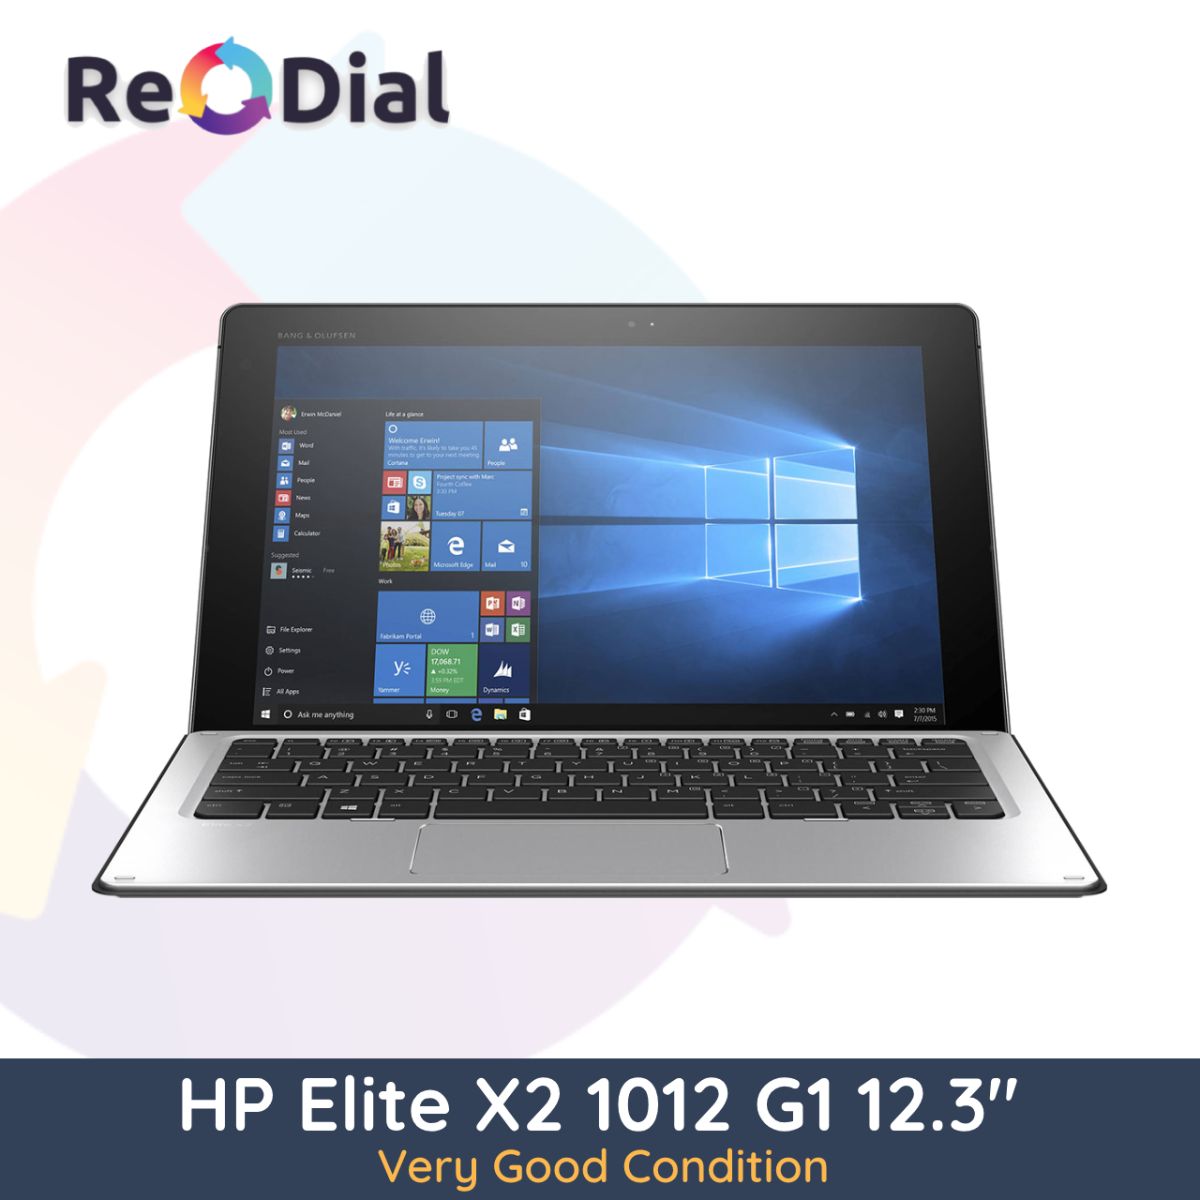 HP Elite X2 1012 G1 Intel m5-6Y57 Cellular 256Gb 8Gb RAM Windows 10 Pro - Very Good